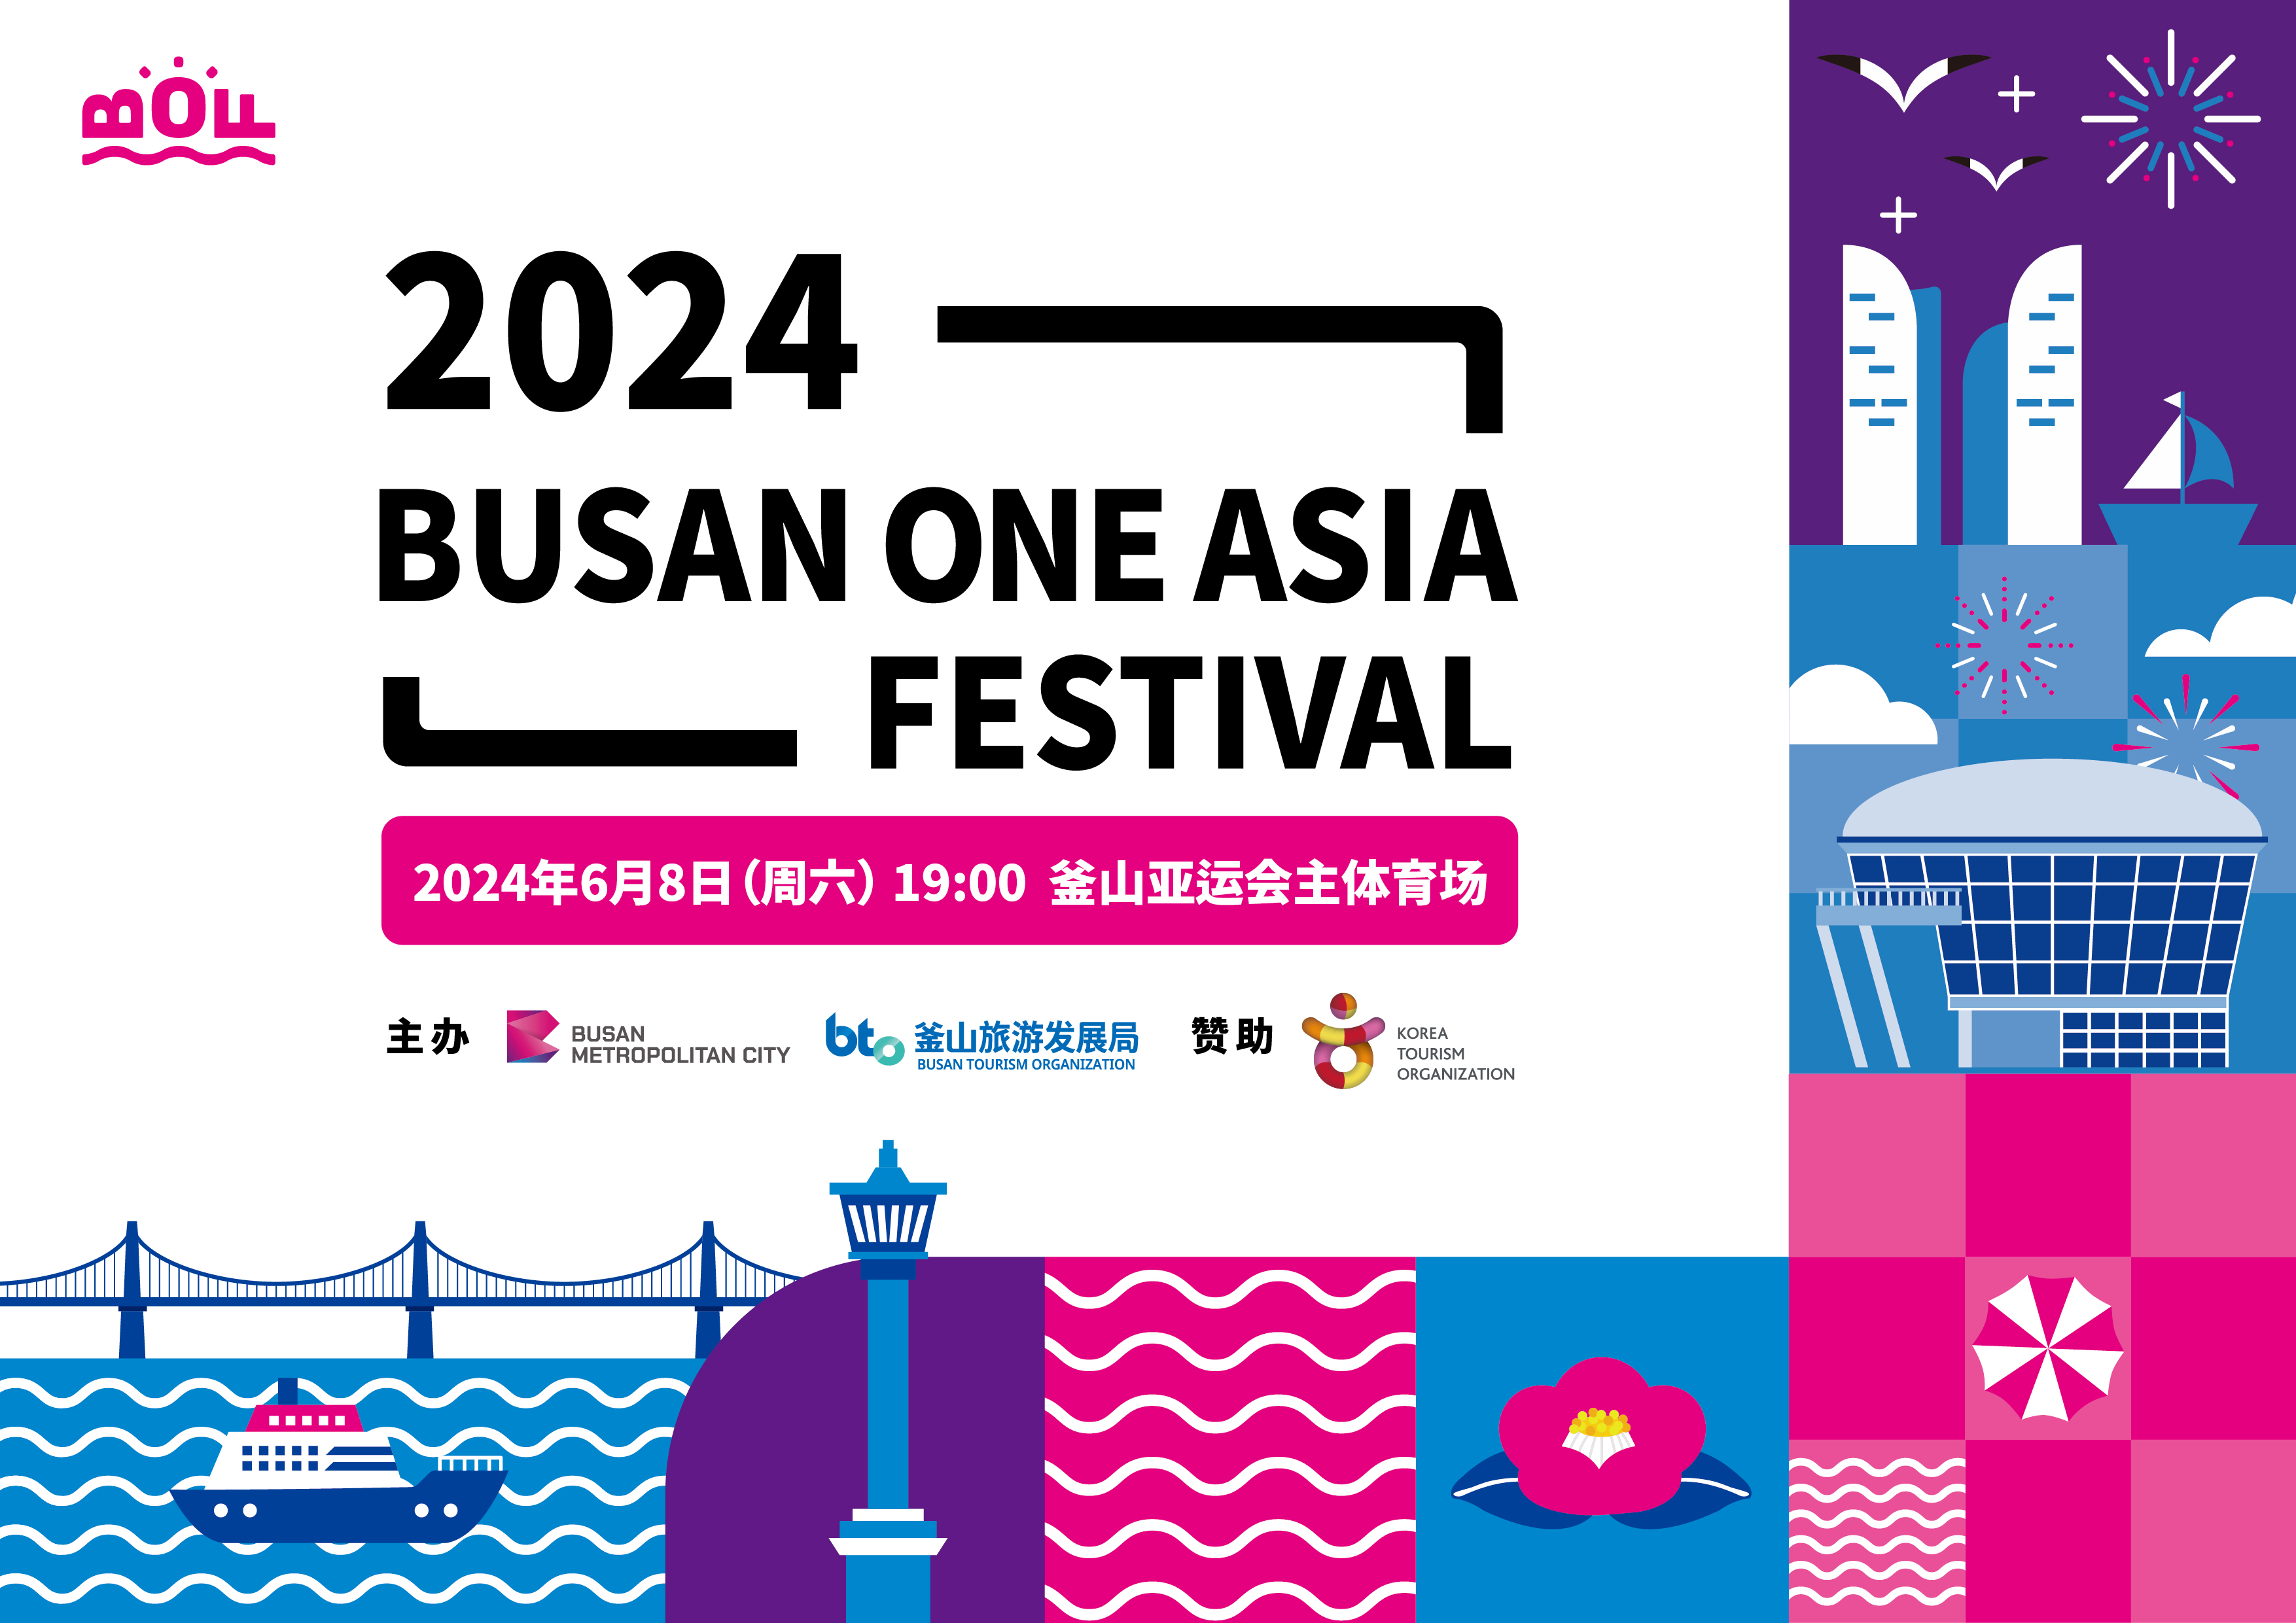 2024 BUSAN ONE ASIA FESTIVAL